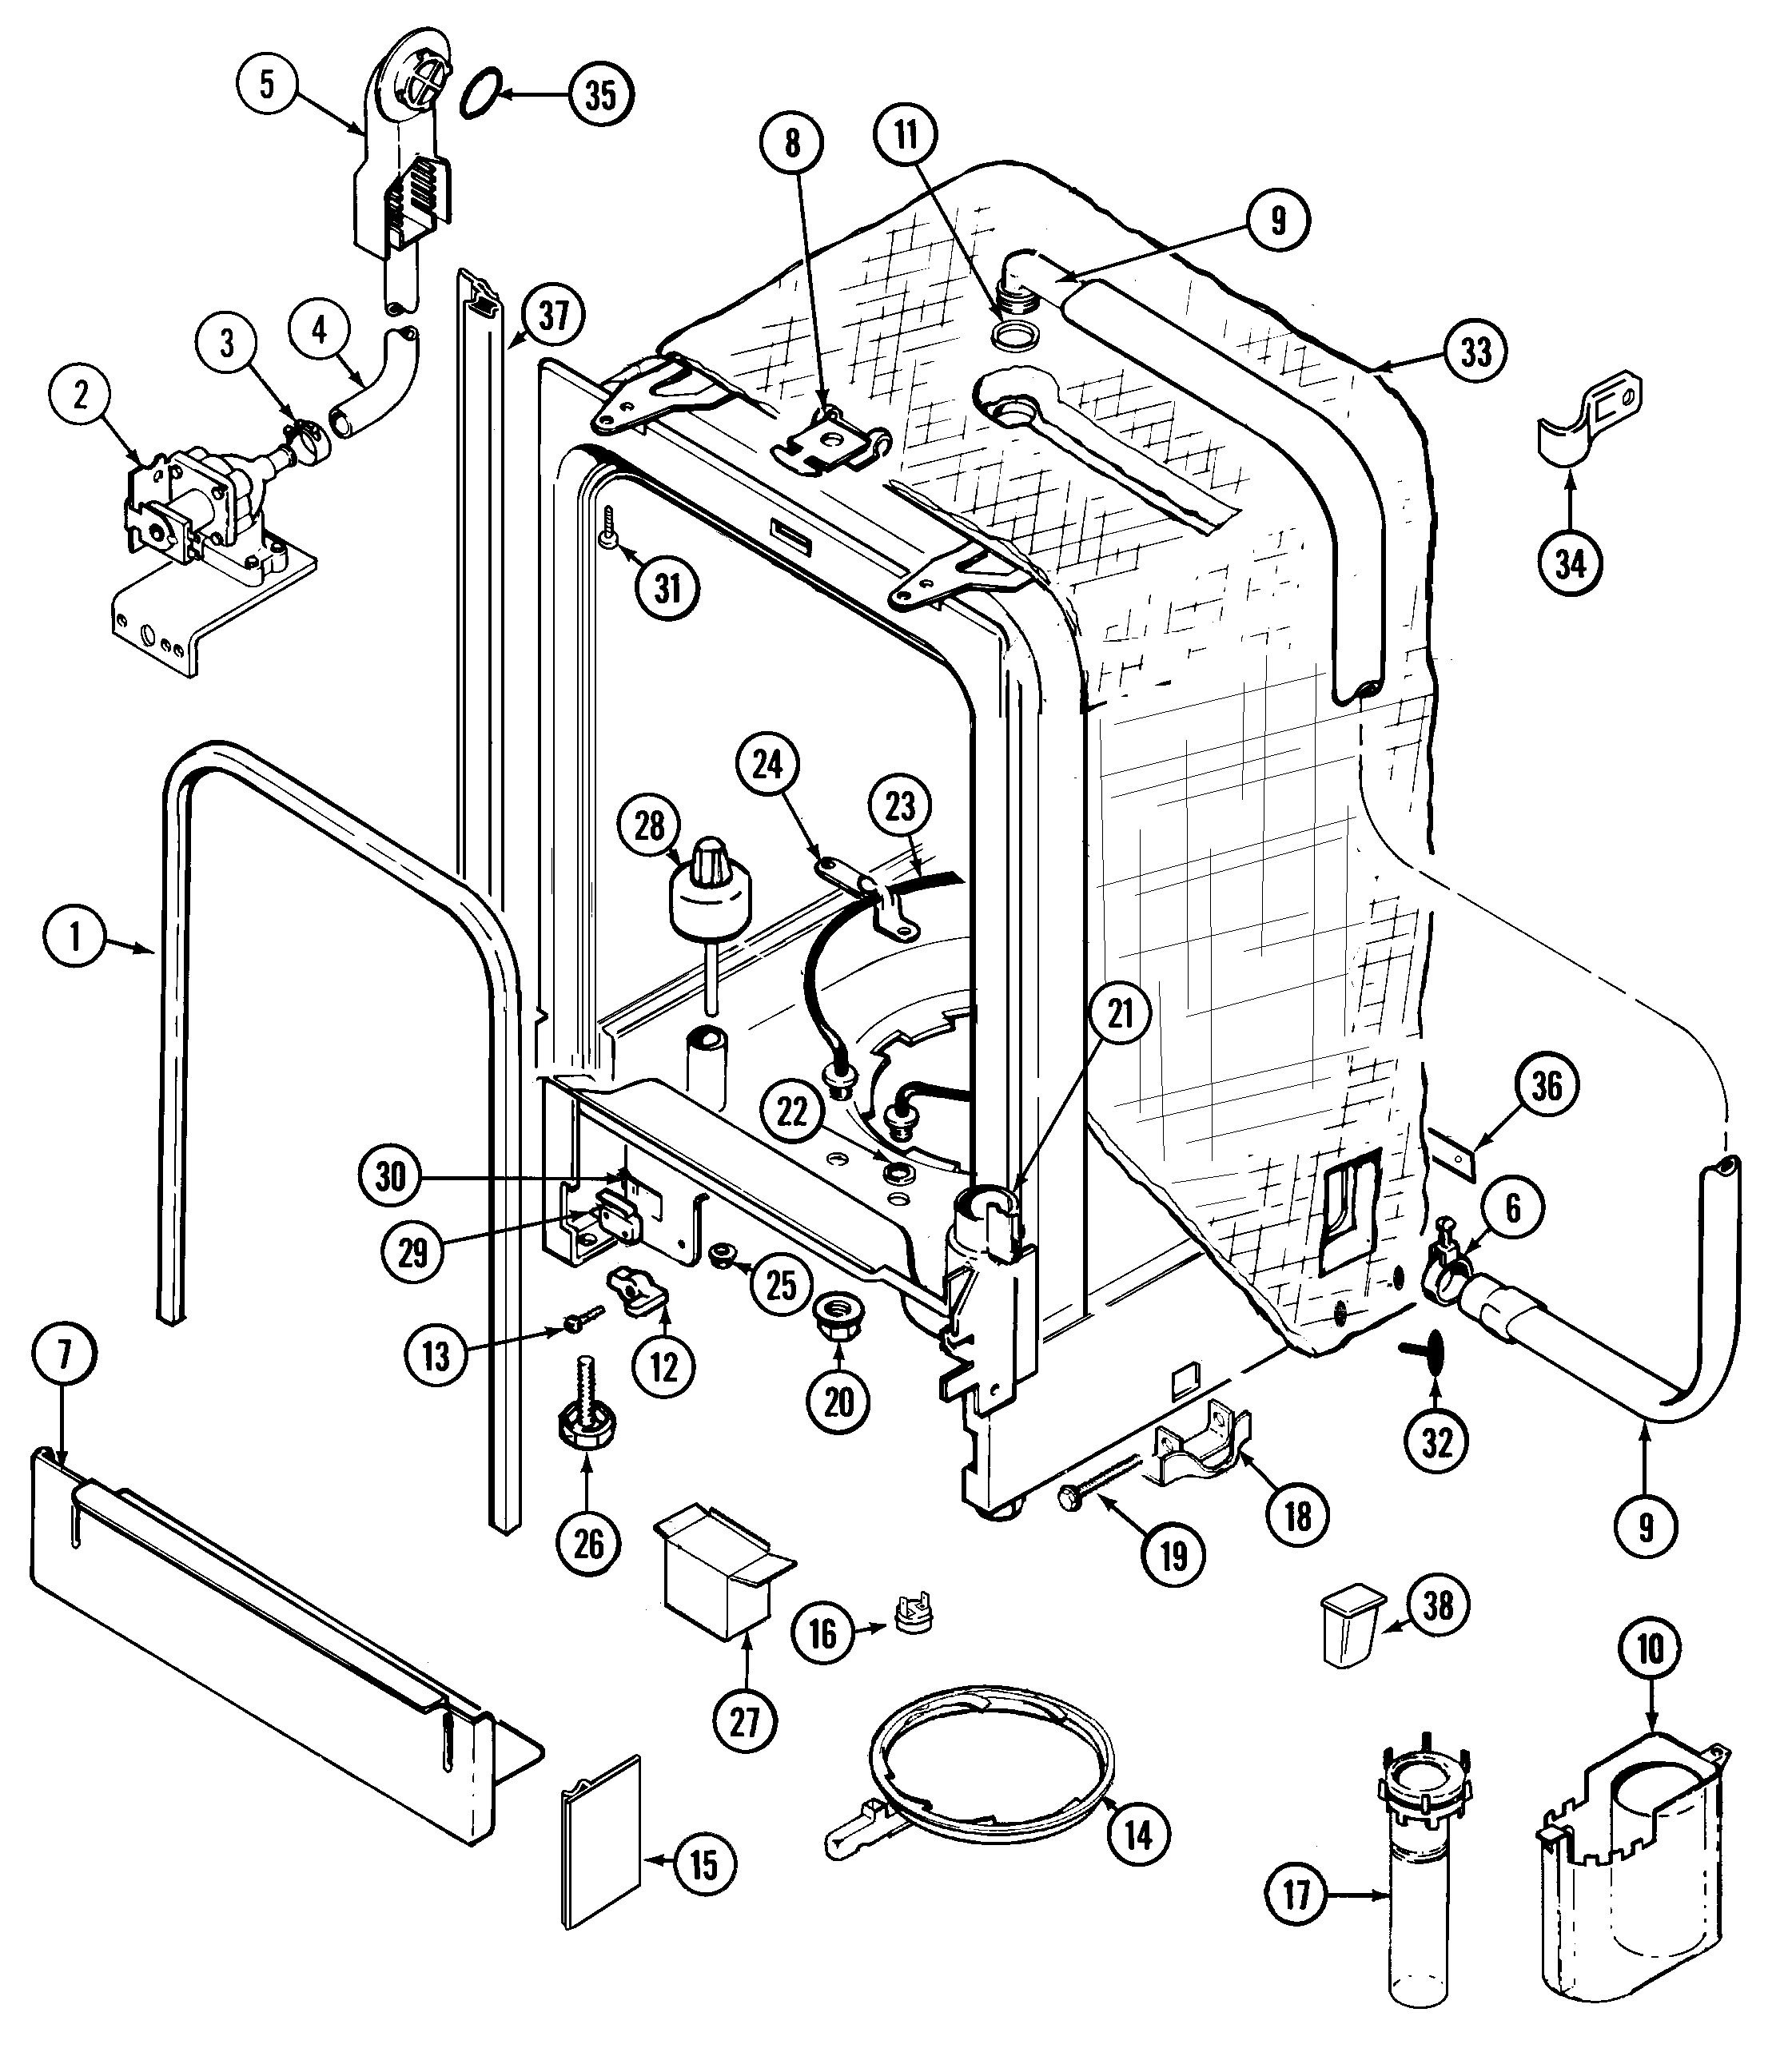 Whirlpool Refrigerator Parts Diagram Whirlpool Dishwasher Schematic Preview Wiring Diagram